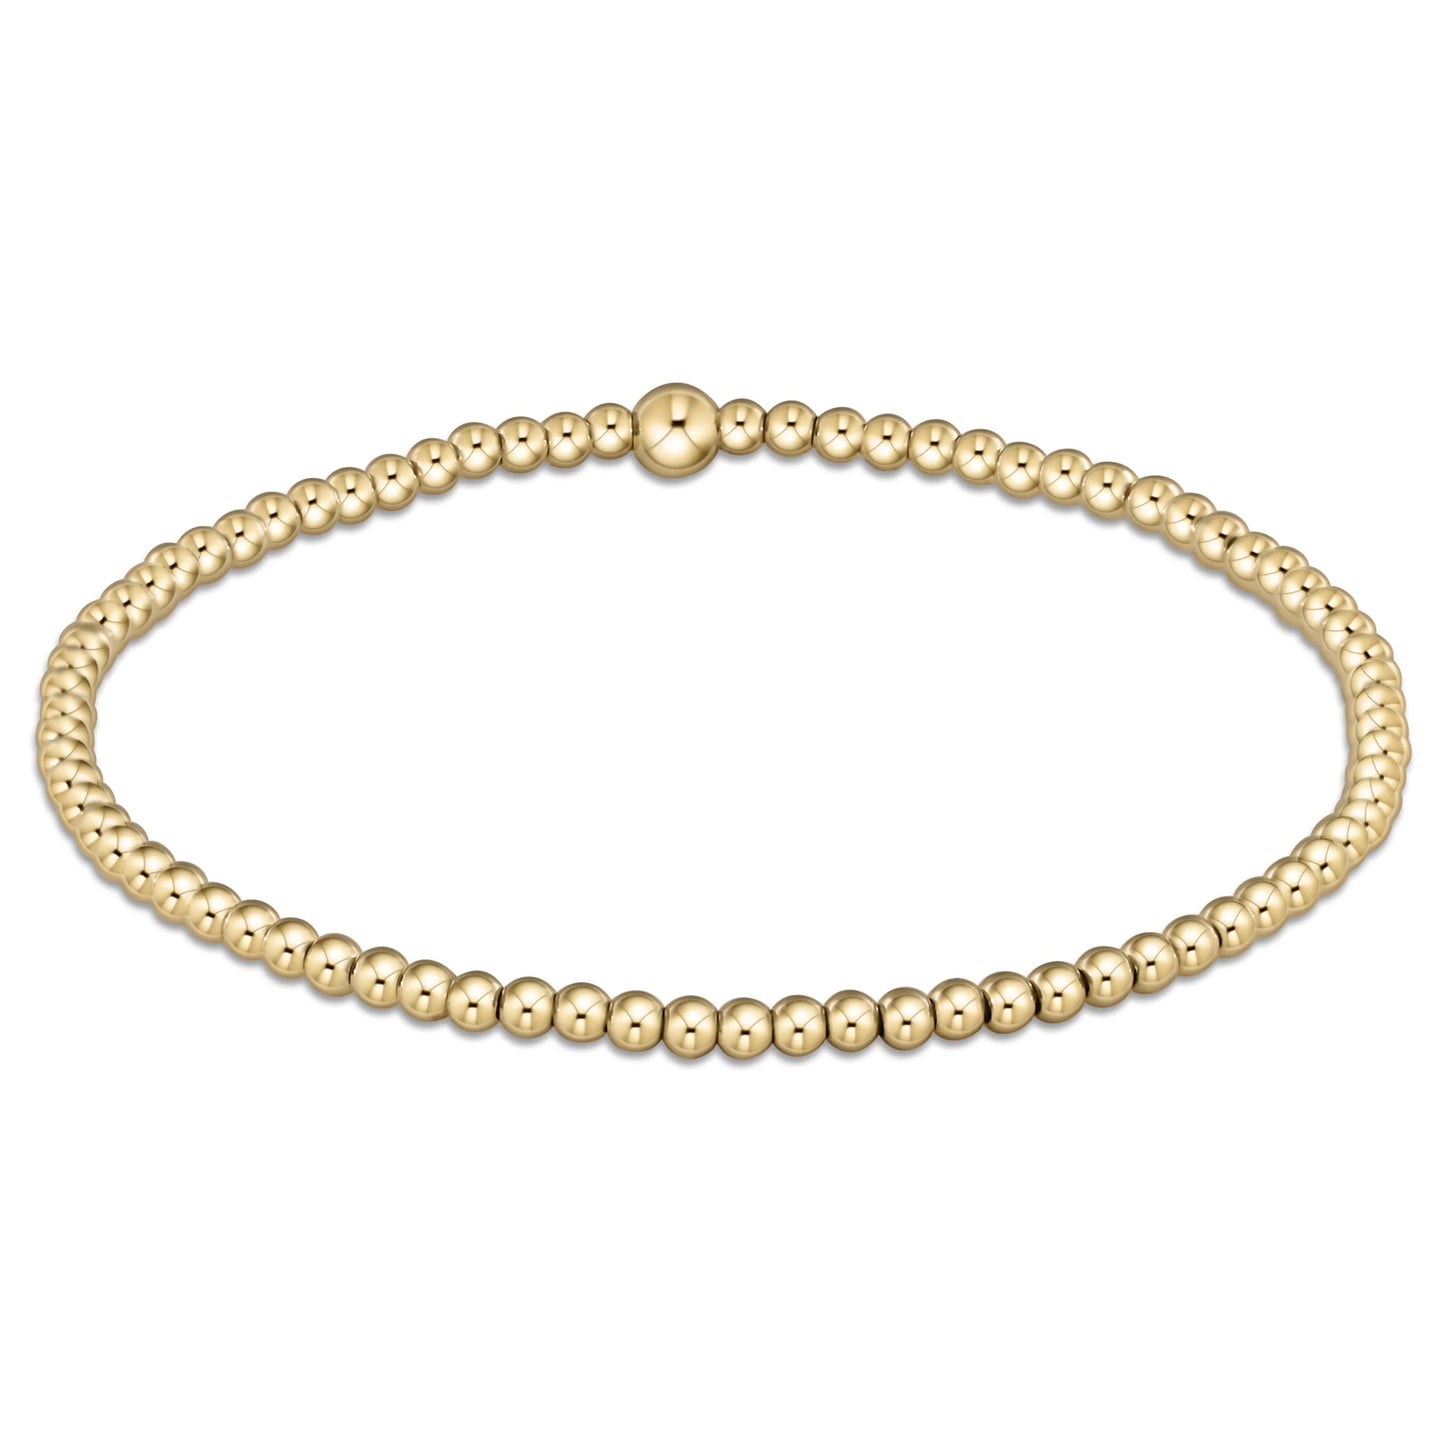 E Newton Classic Gold 2.5mm Bead Bracelet-Bracelets-ENEWTON-The Village Shoppe, Women’s Fashion Boutique, Shop Online and In Store - Located in Muscle Shoals, AL.